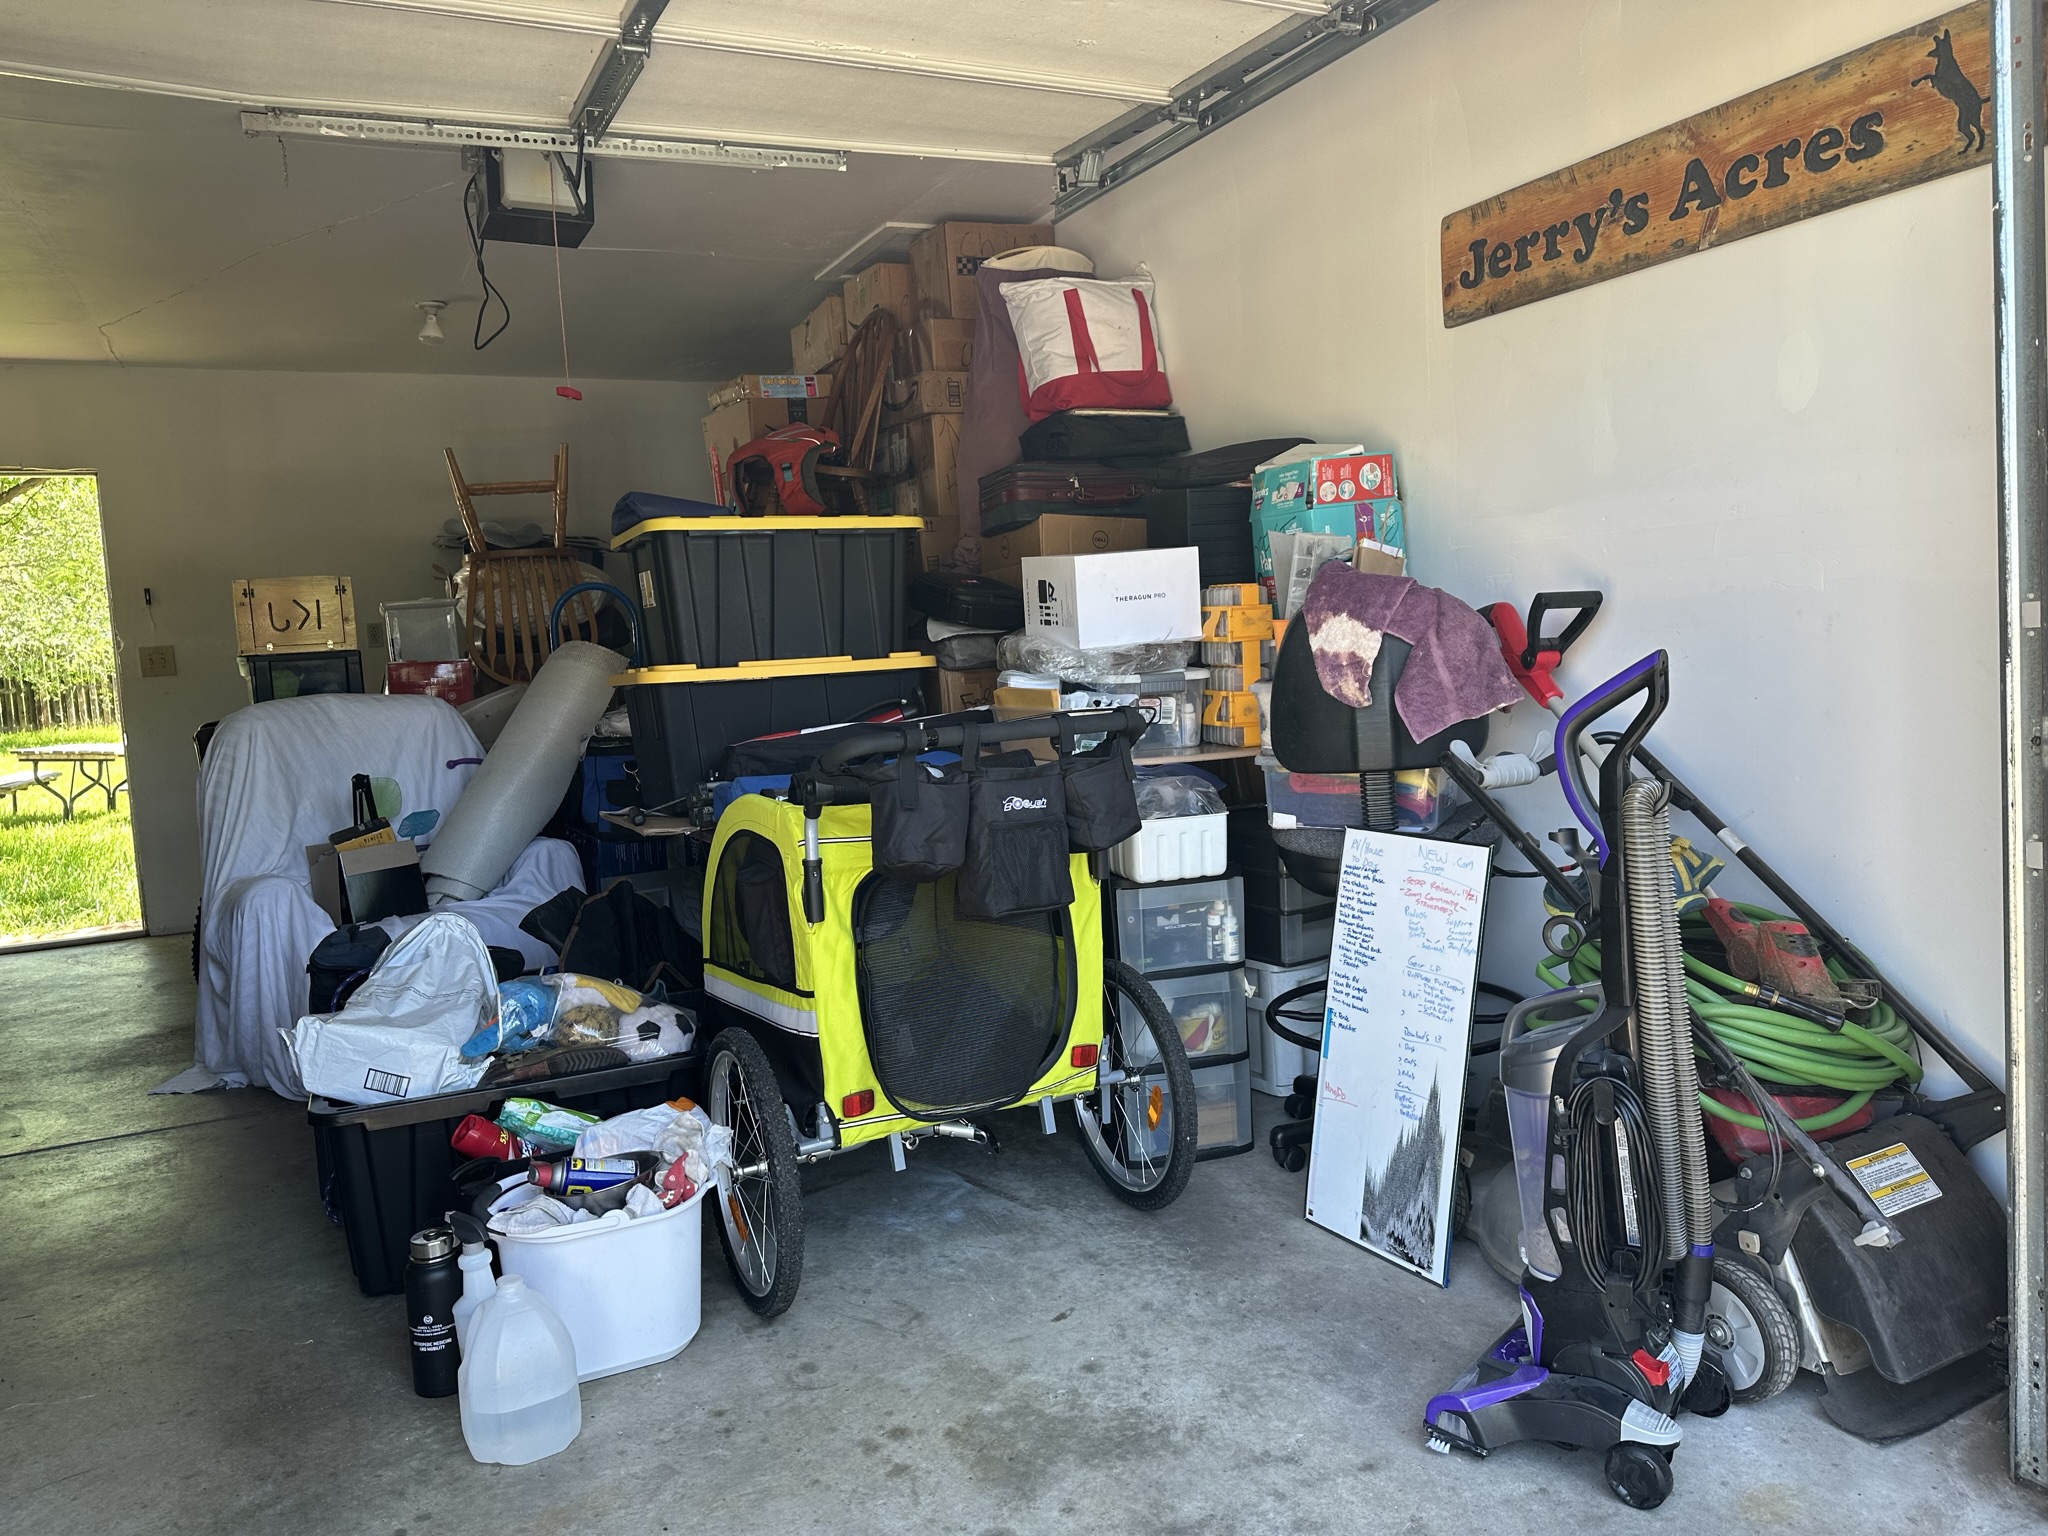 Full-time RVer garage storage space full of crap